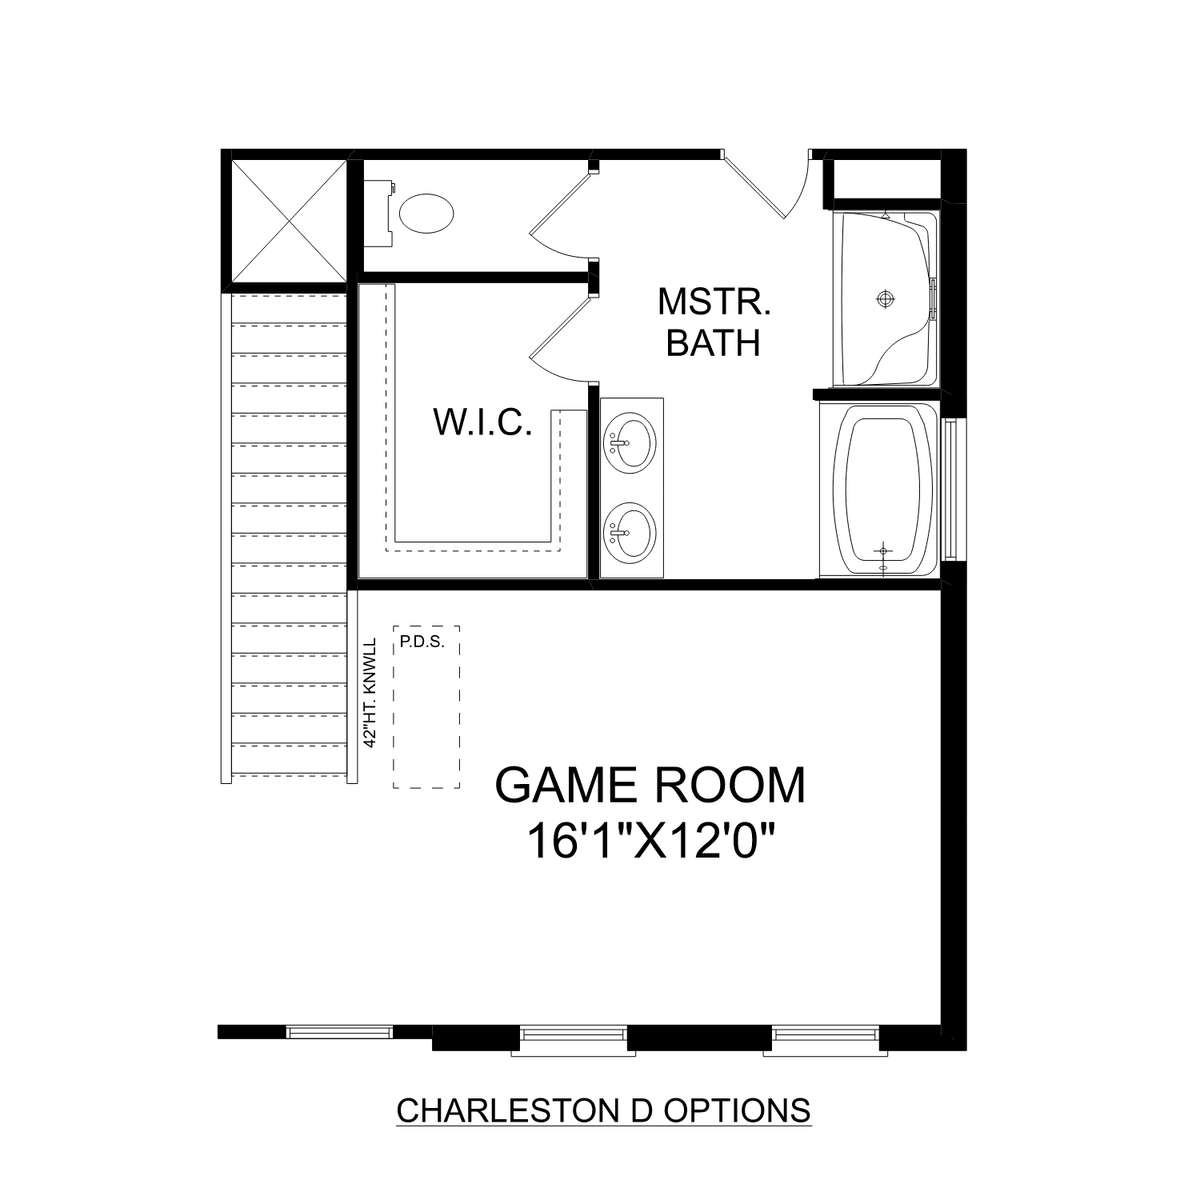 3 - The Charleston D floor plan layout for 9204 Current Way SE in Davidson Homes' Watts Glen community.